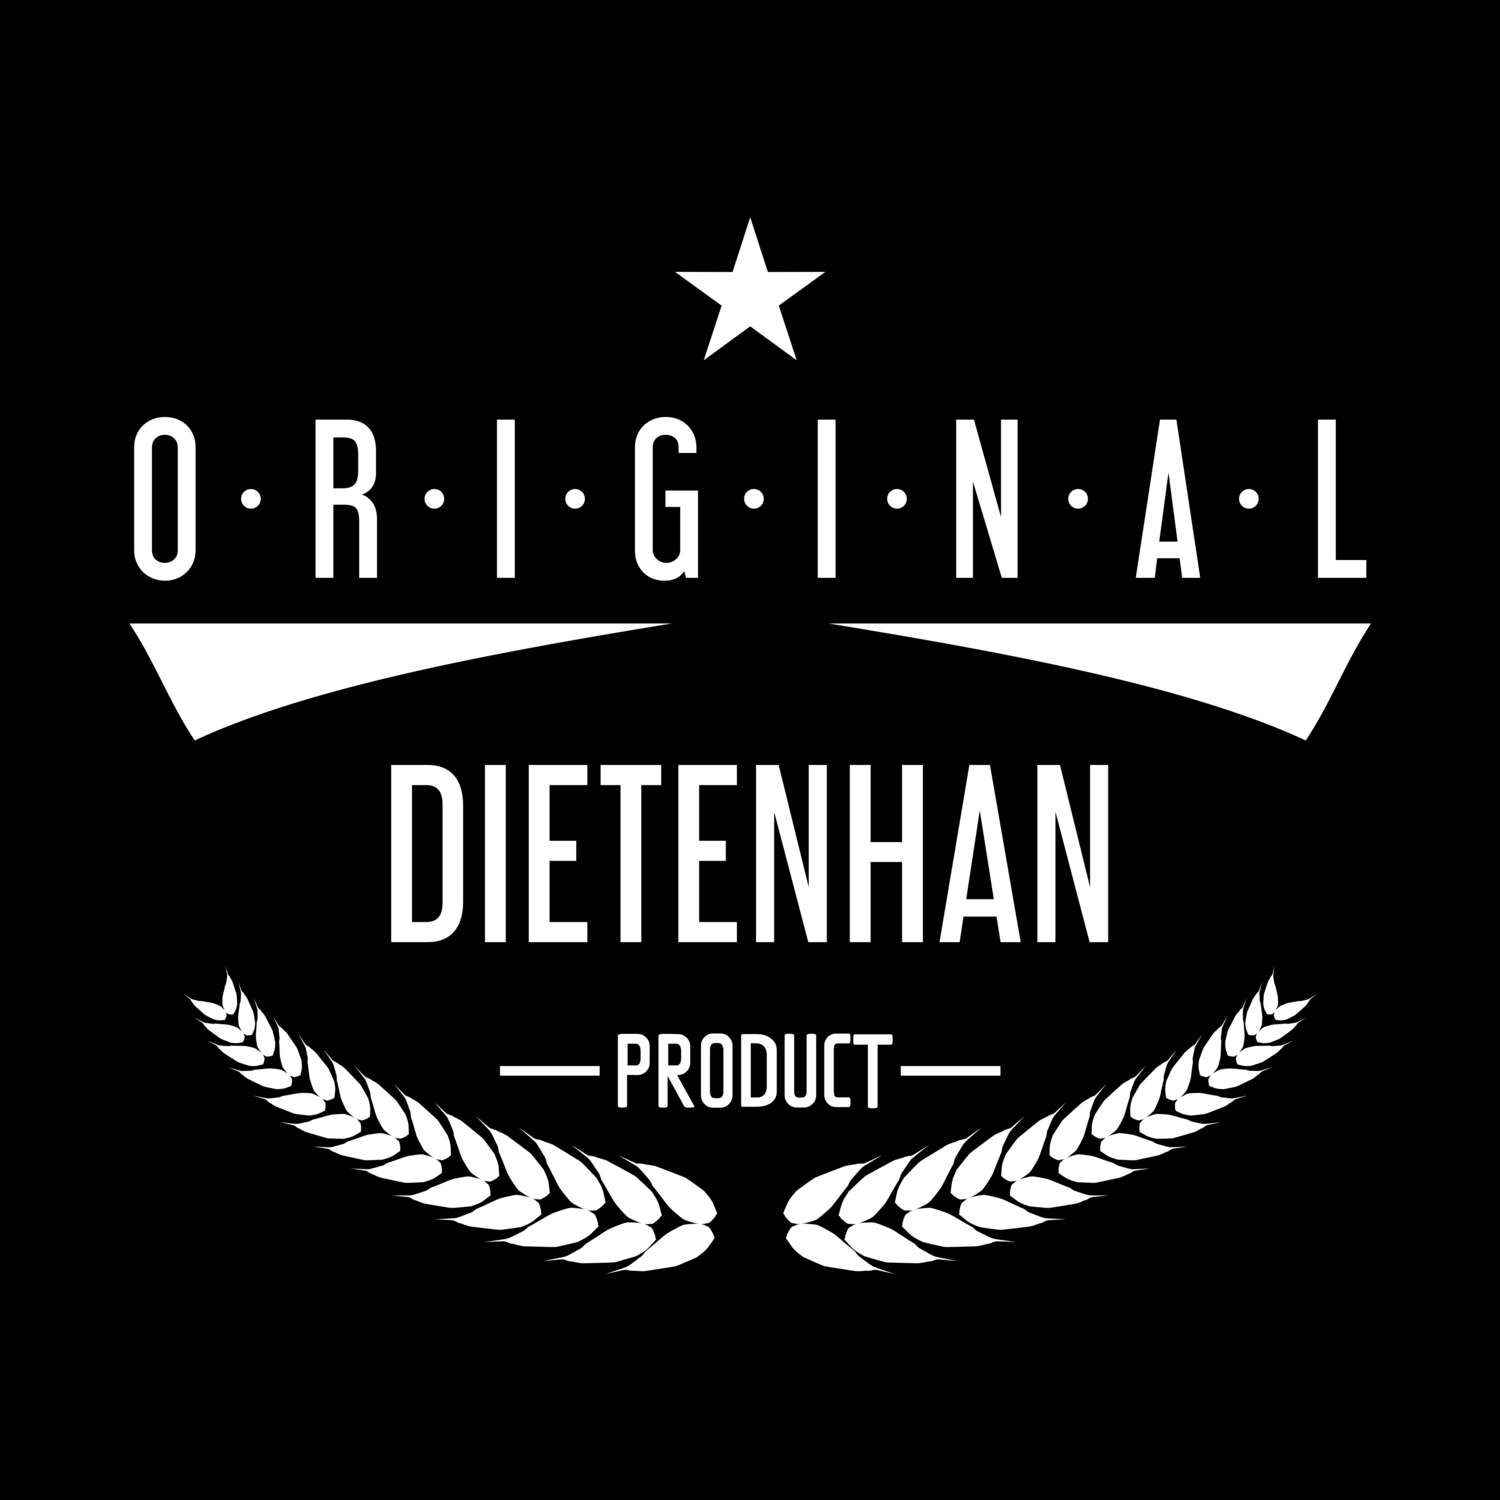 Dietenhan T-Shirt »Original Product«